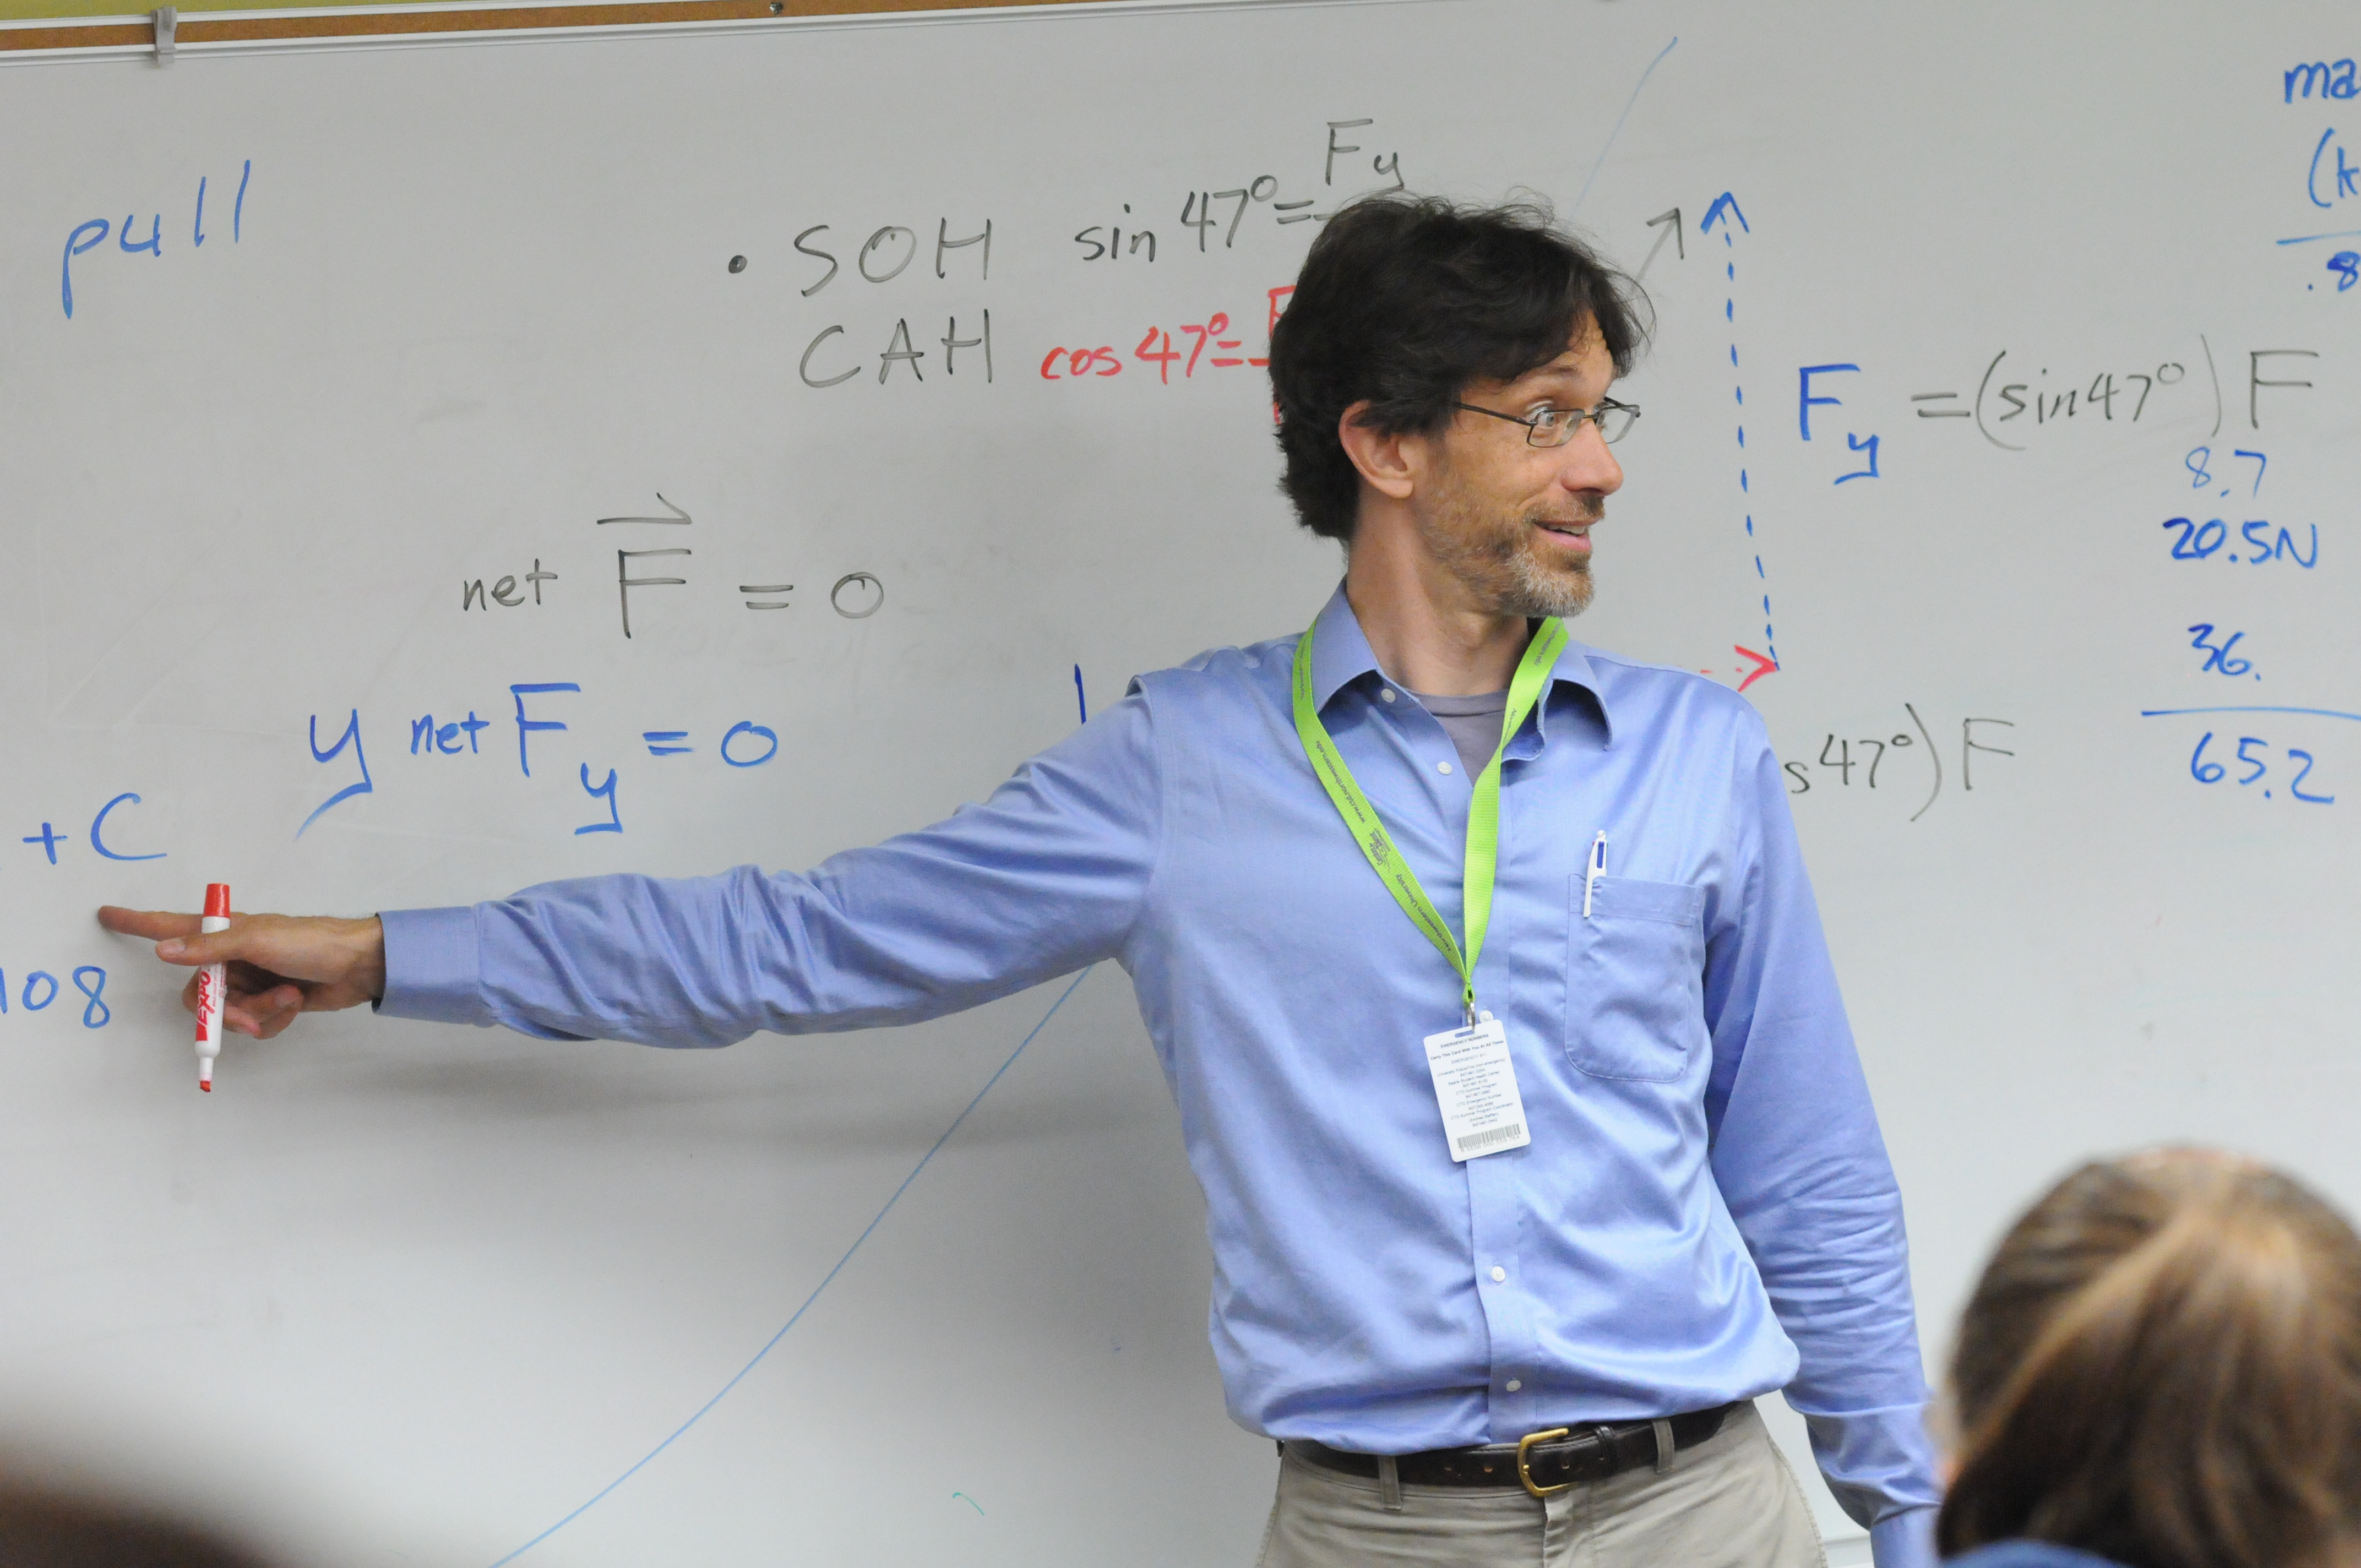 male teacher at blackboard demonstrating math equations